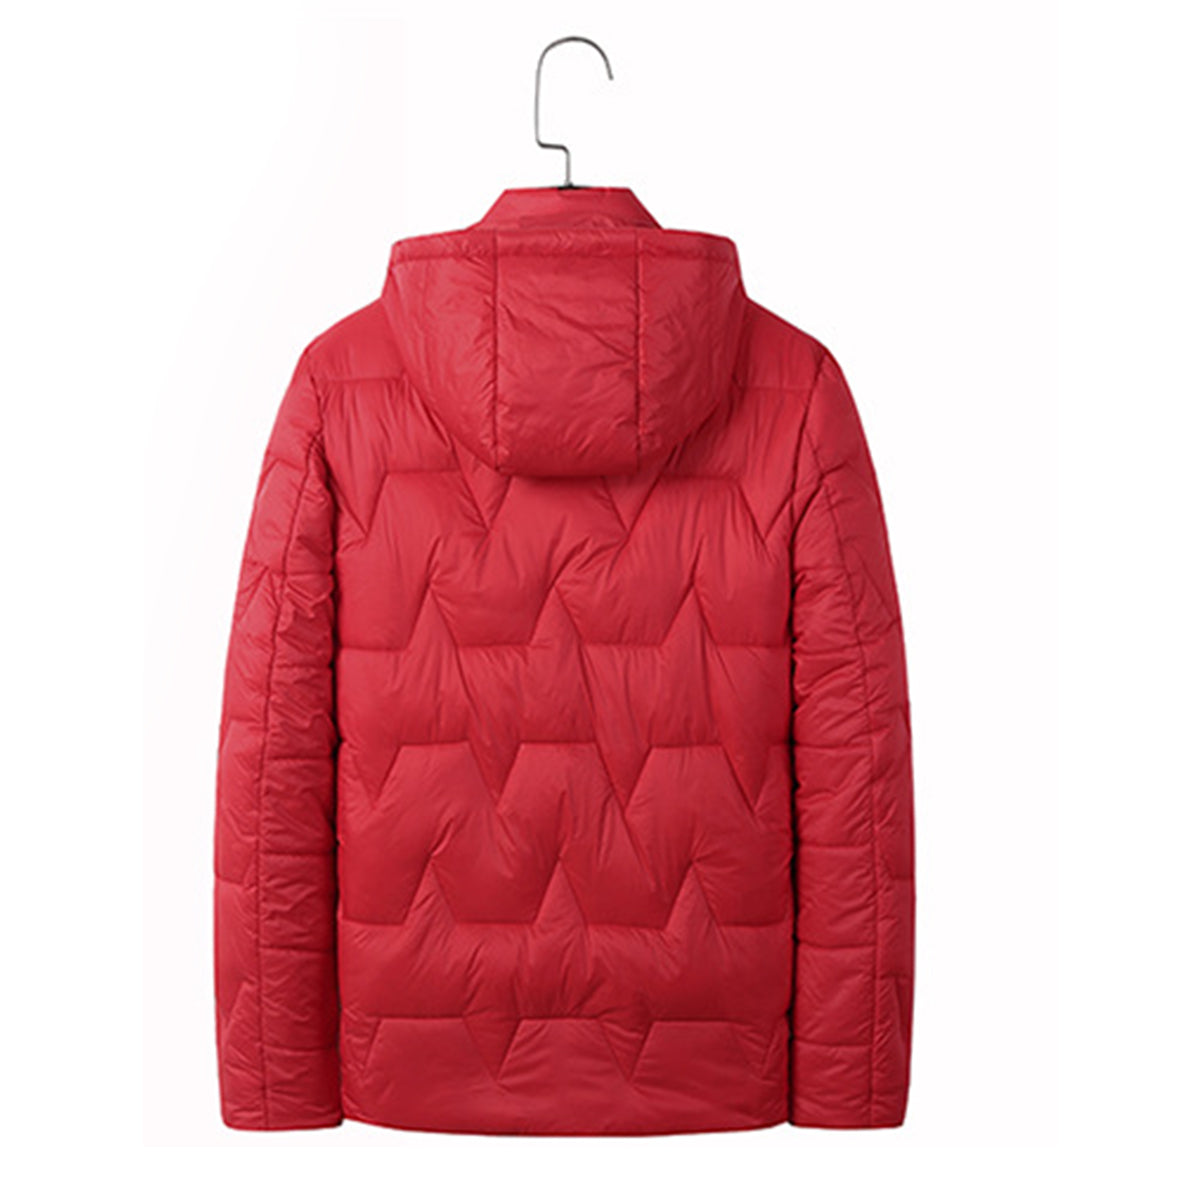 Firebrick USB Electric Heated Coats Heating Hooded Jacket Long Sleeves Winter Warm Clothing